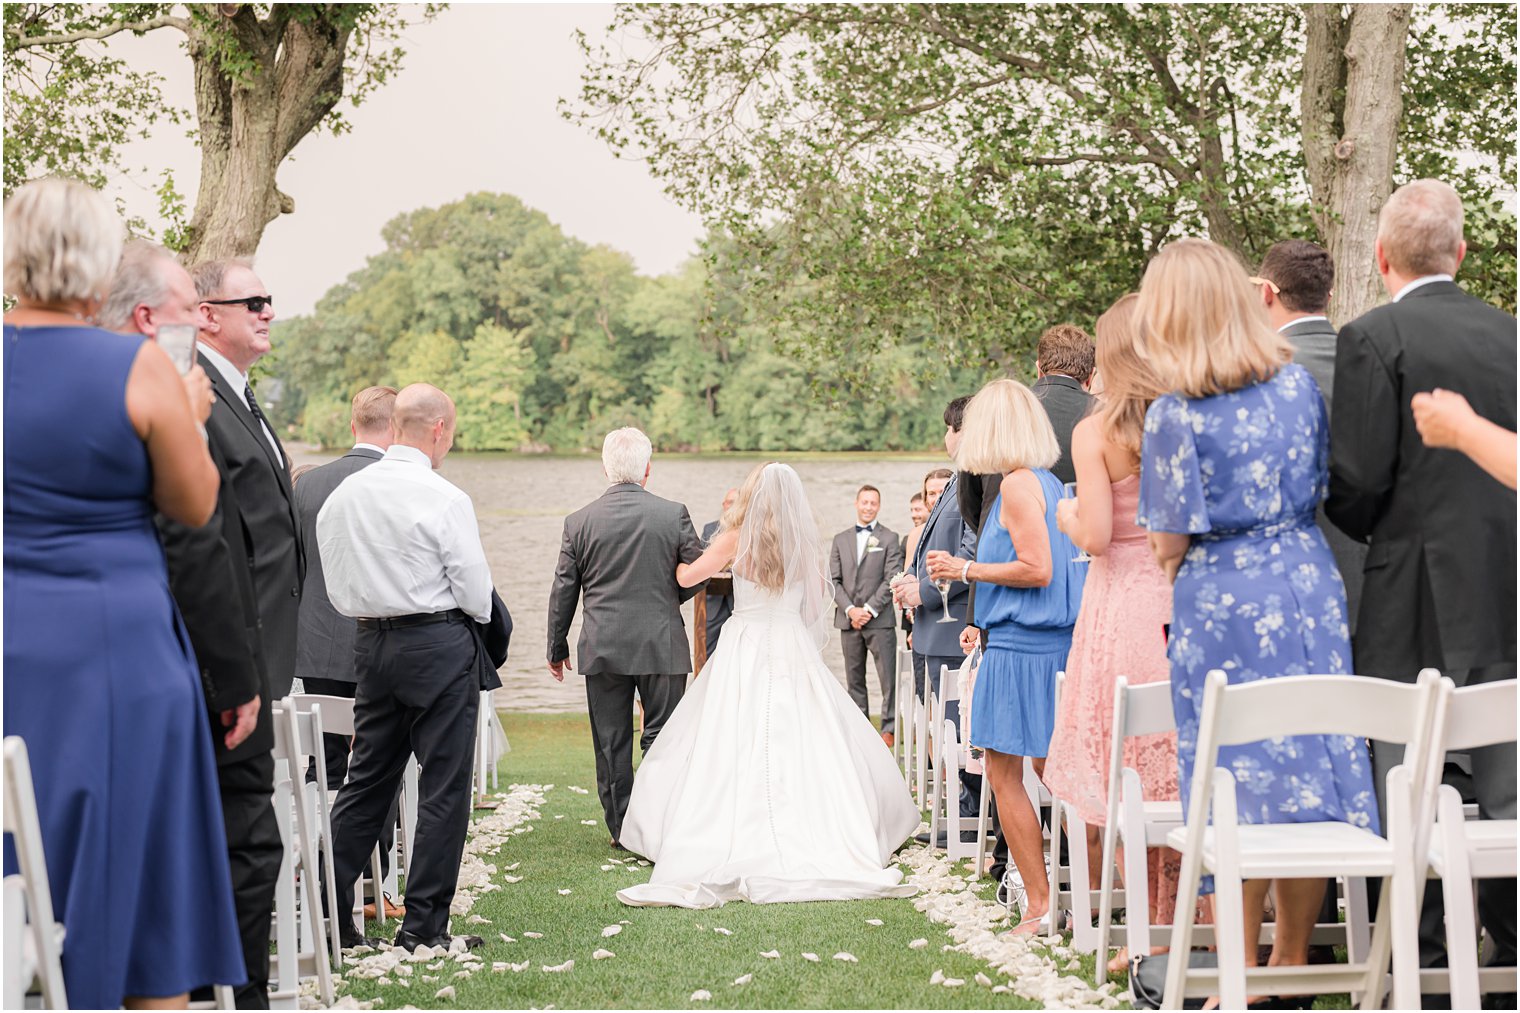 dad walks bride down aisle during outdoor wedding ceremony in Franklin Lakes